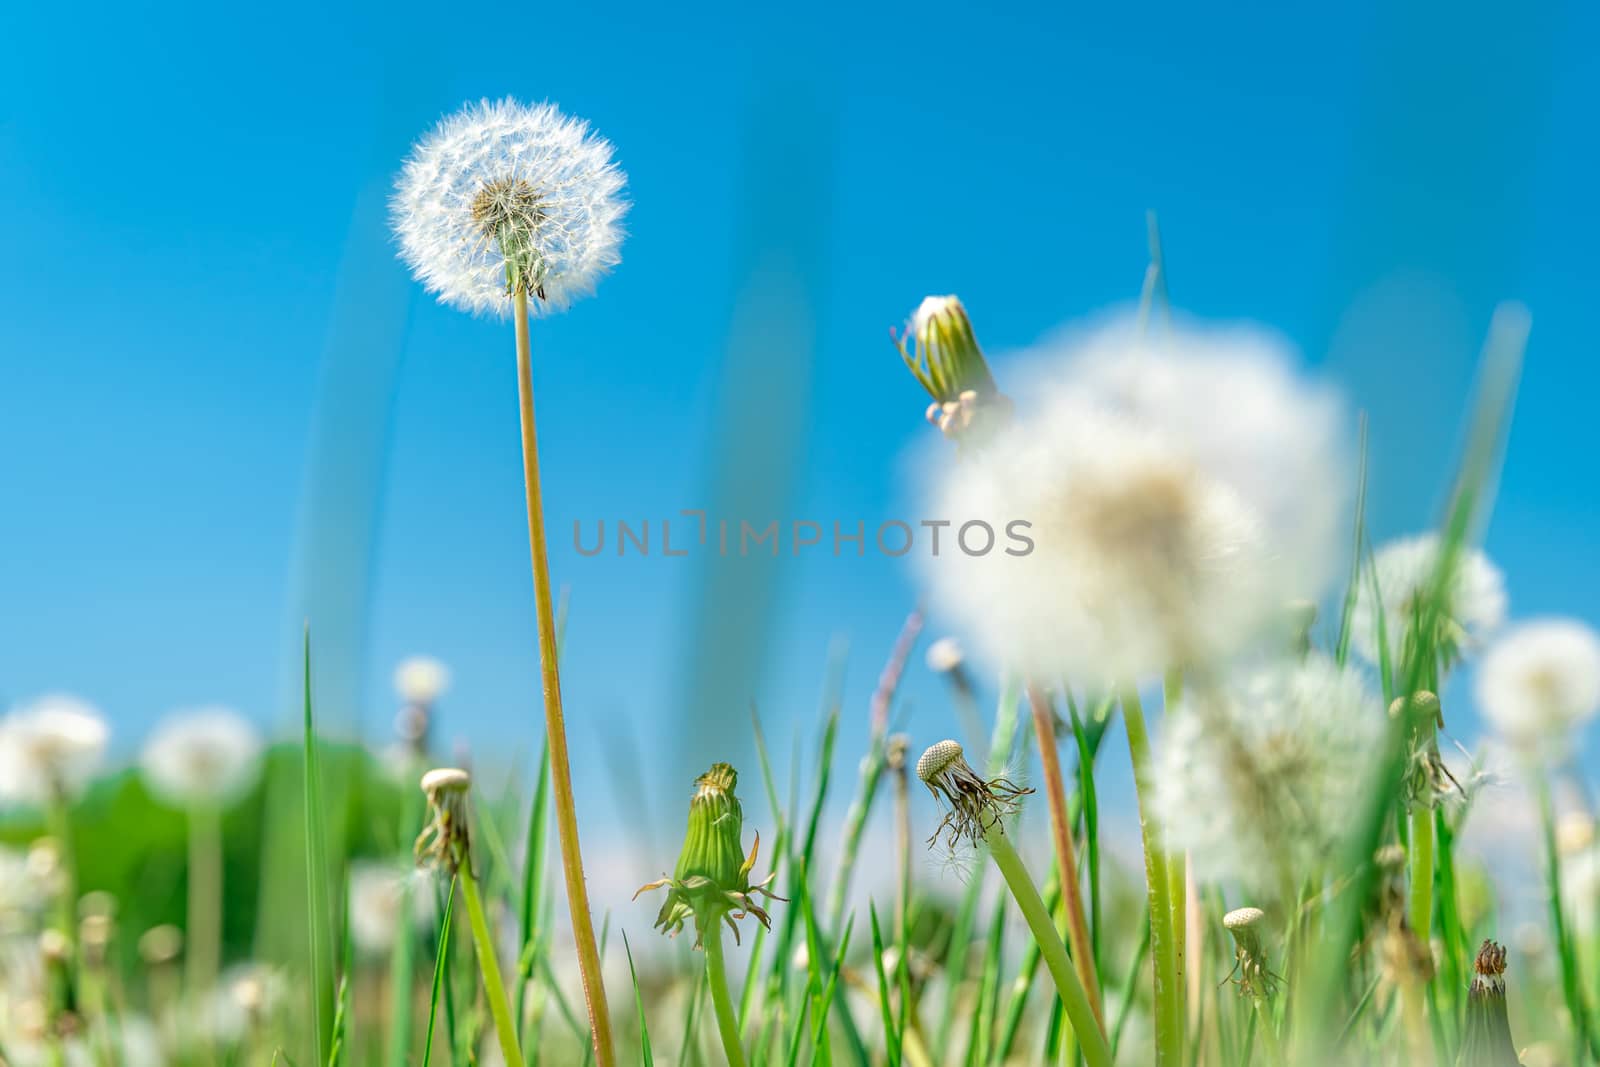 dandelions on a green field in summer time by Edophoto